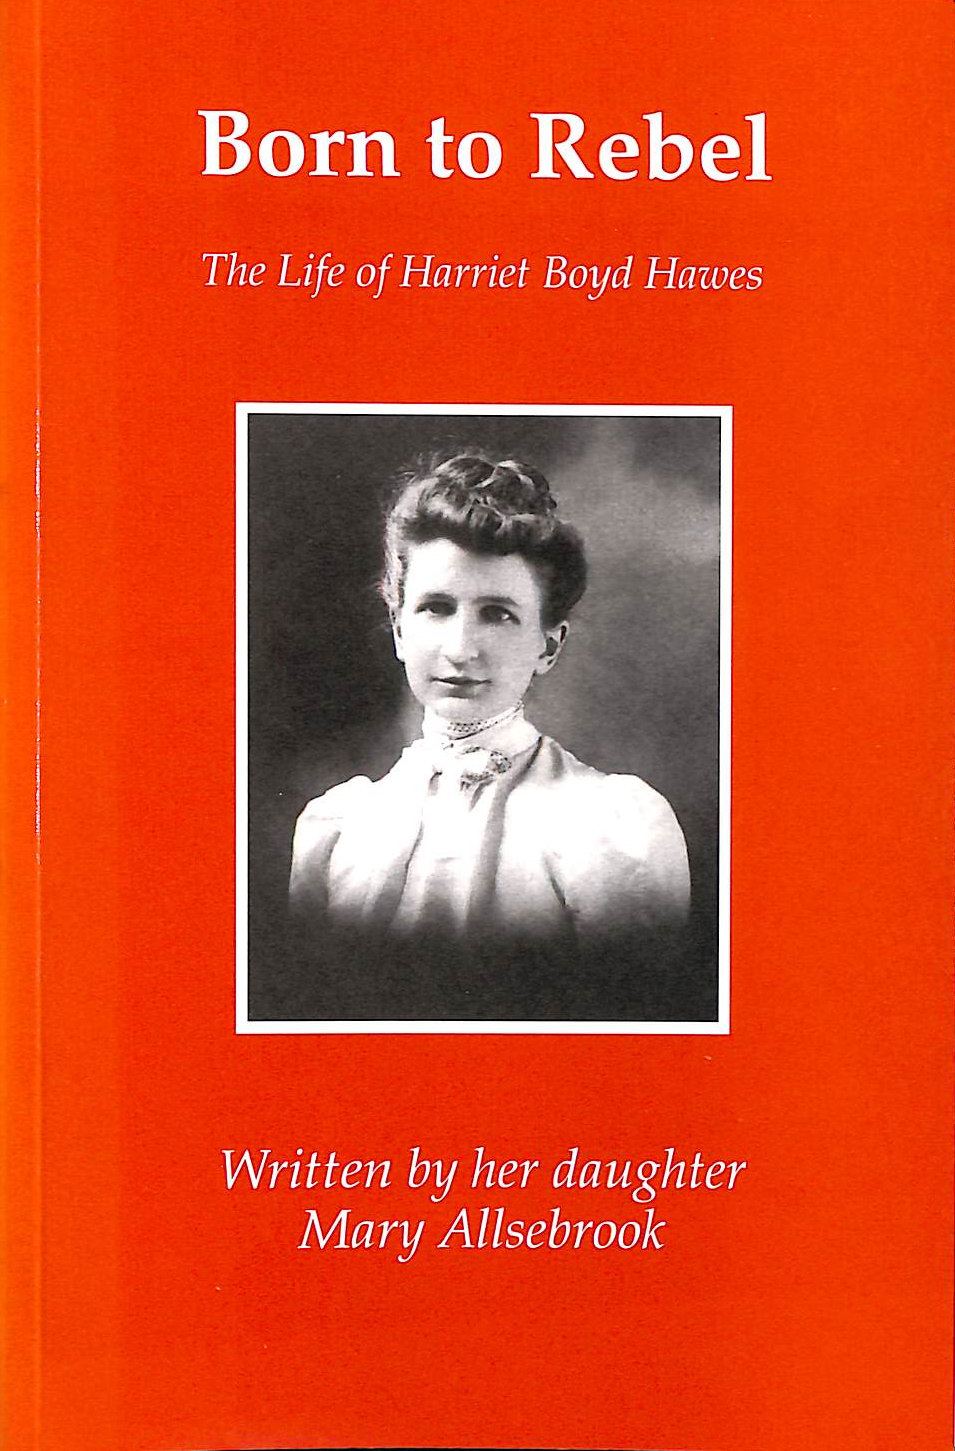 MARY ALLSEBROOK; ANNIE ALLSEBROOK [EDITOR] - Born to Rebel: The Life of Harriet Boyd Hawes